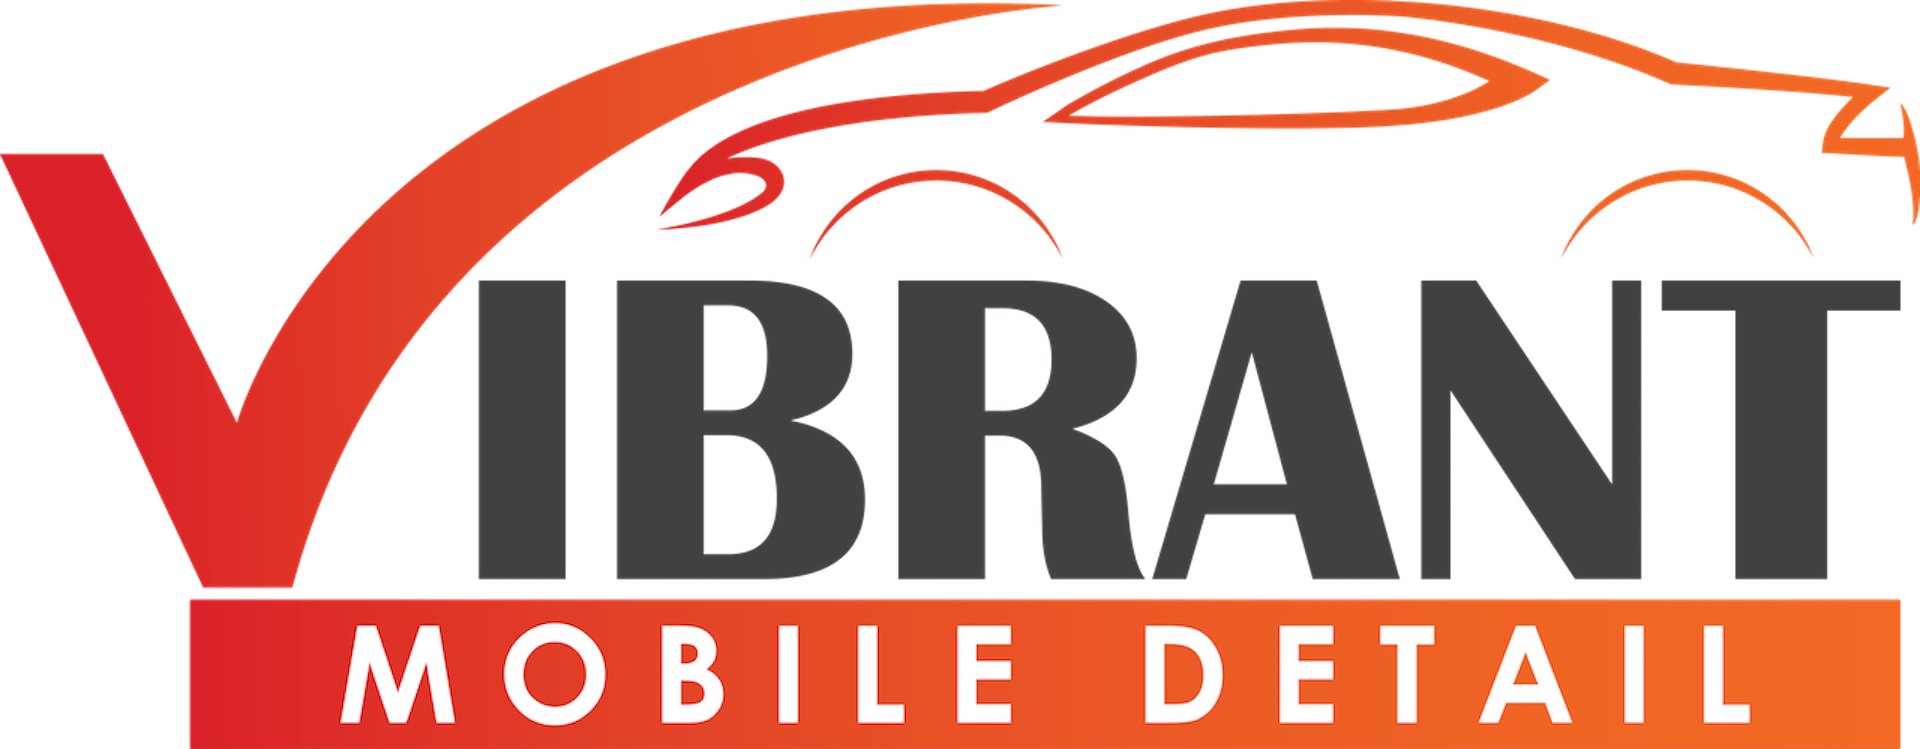 Vibrant Mobile Detail - Business (1920x749)